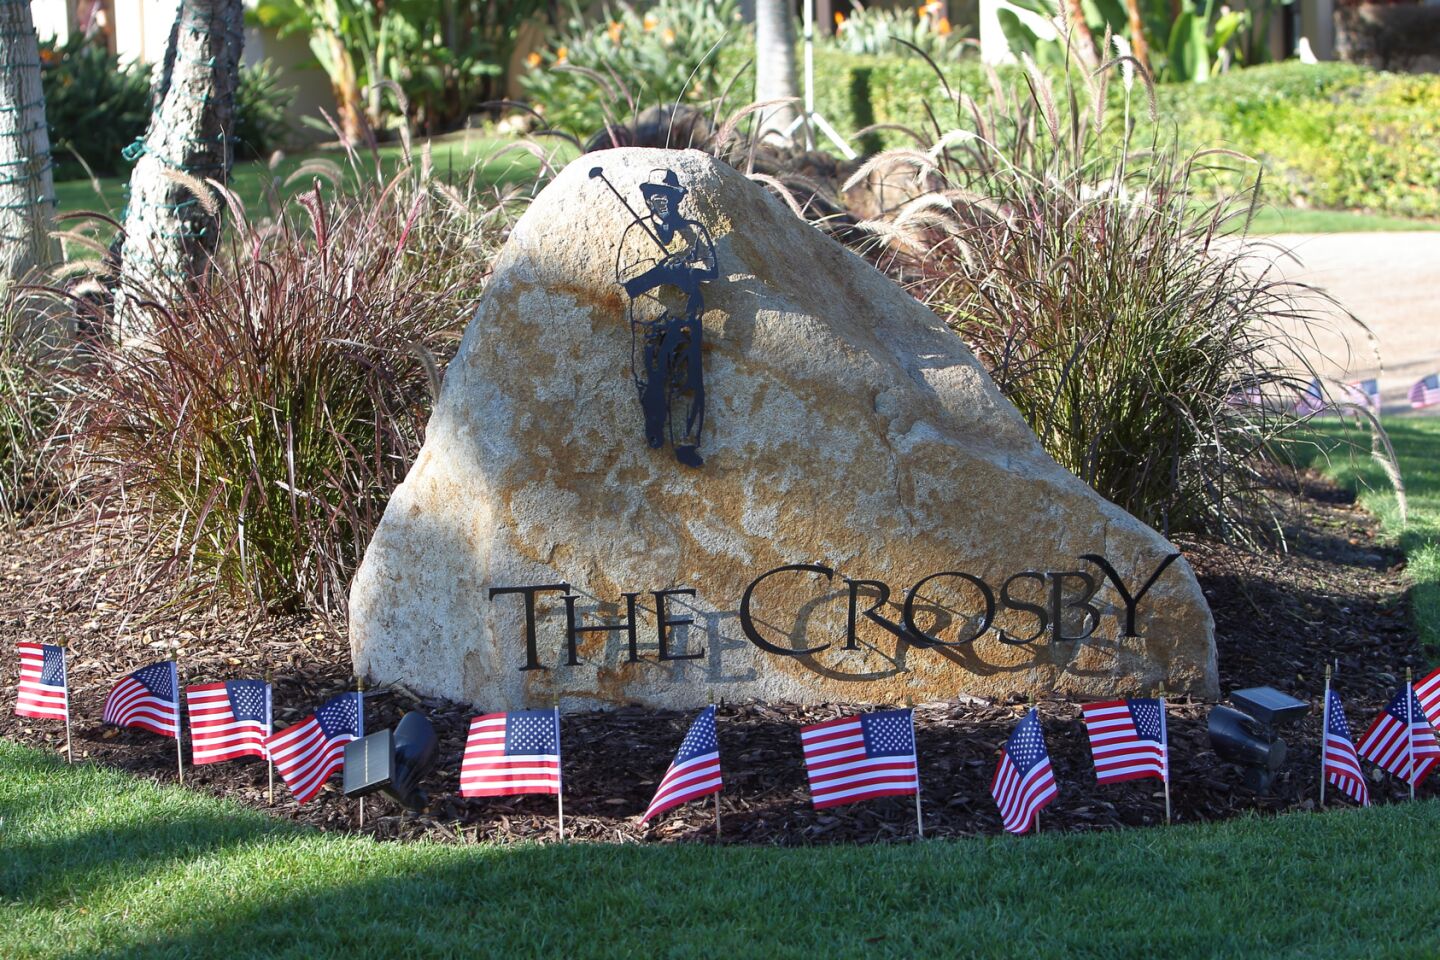 16th annual Military Appreciation Day at The Crosby Golf Club